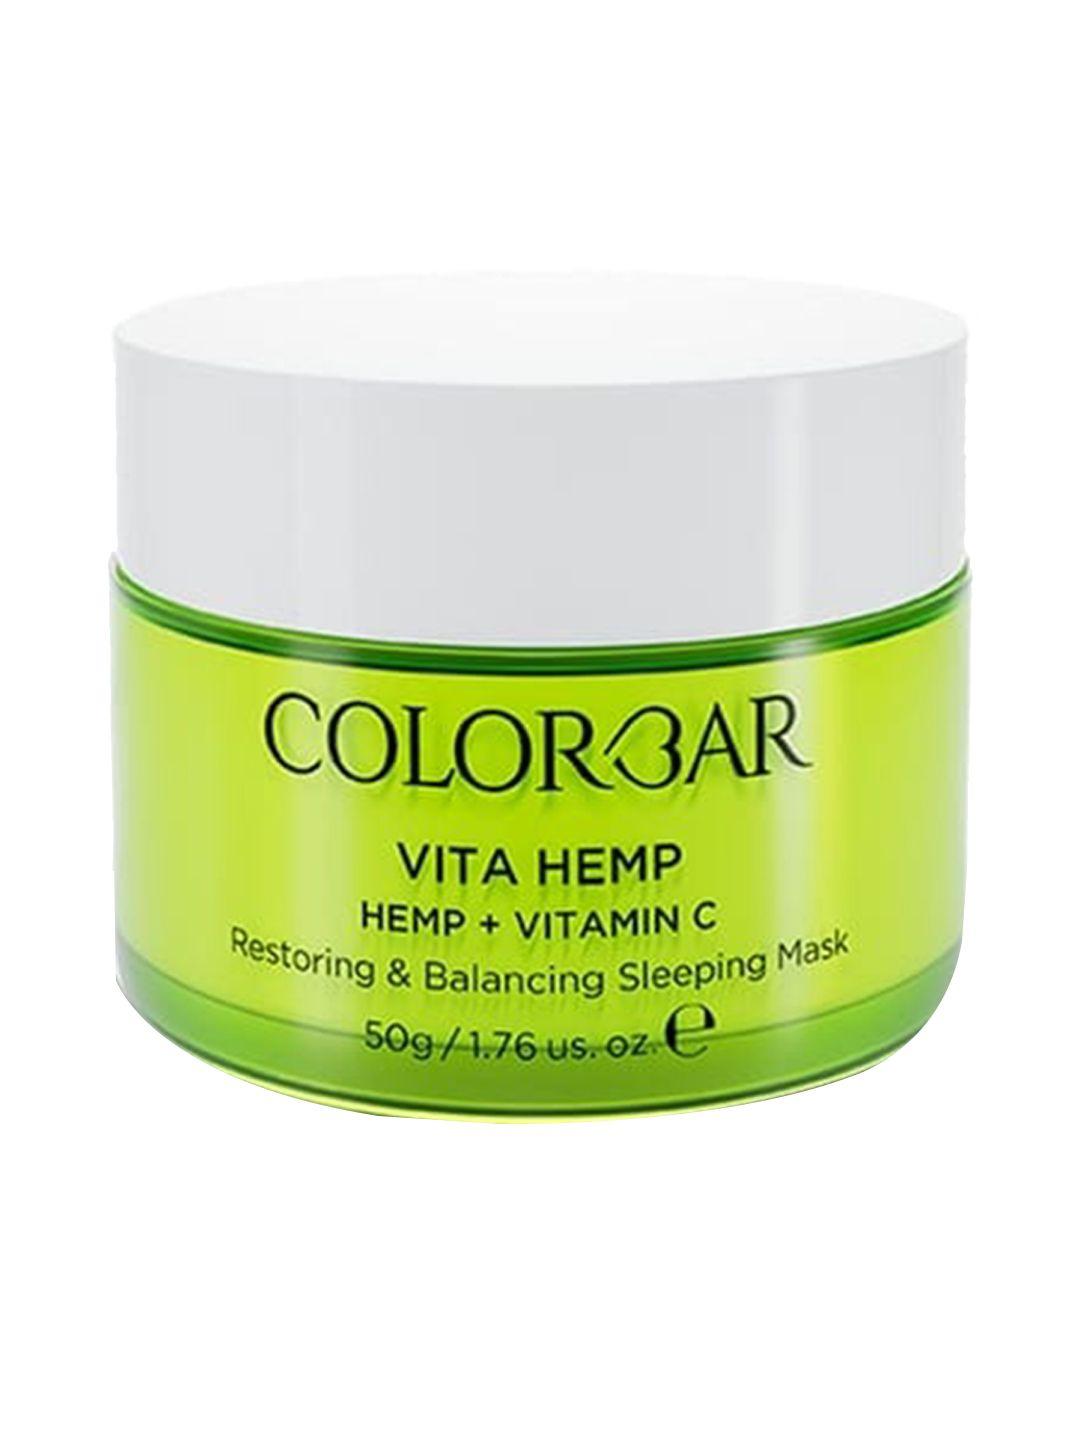 colorbar vita hemp restoring & balancing sleeping mask with vitamin c - 50g